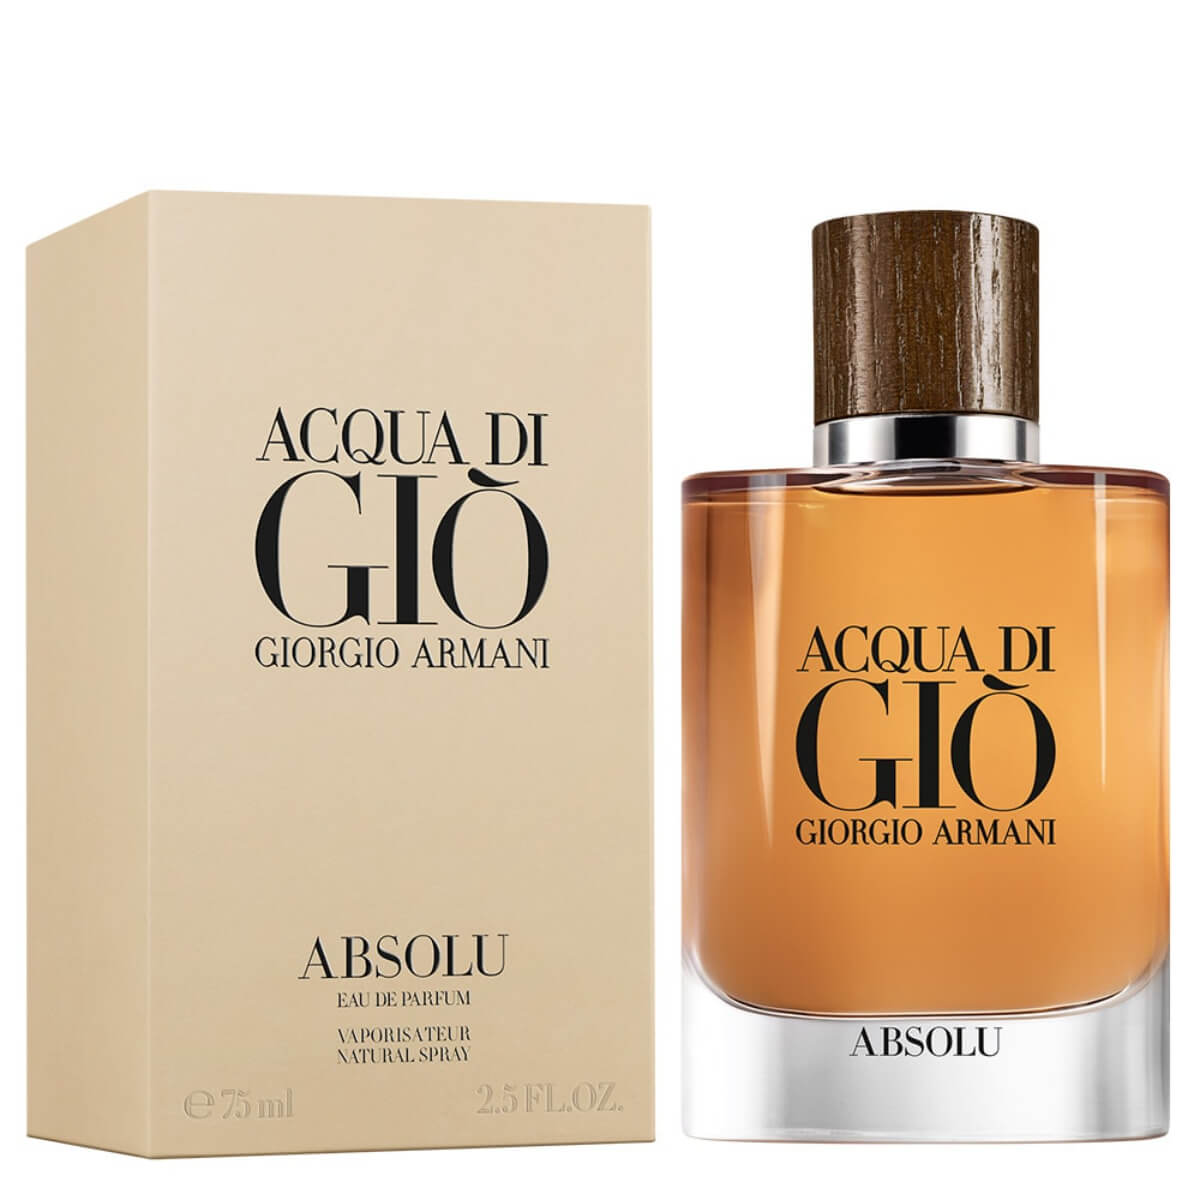 Giorgio Armani is a Aqua Eau Gio Eau de Parfum - 75ML